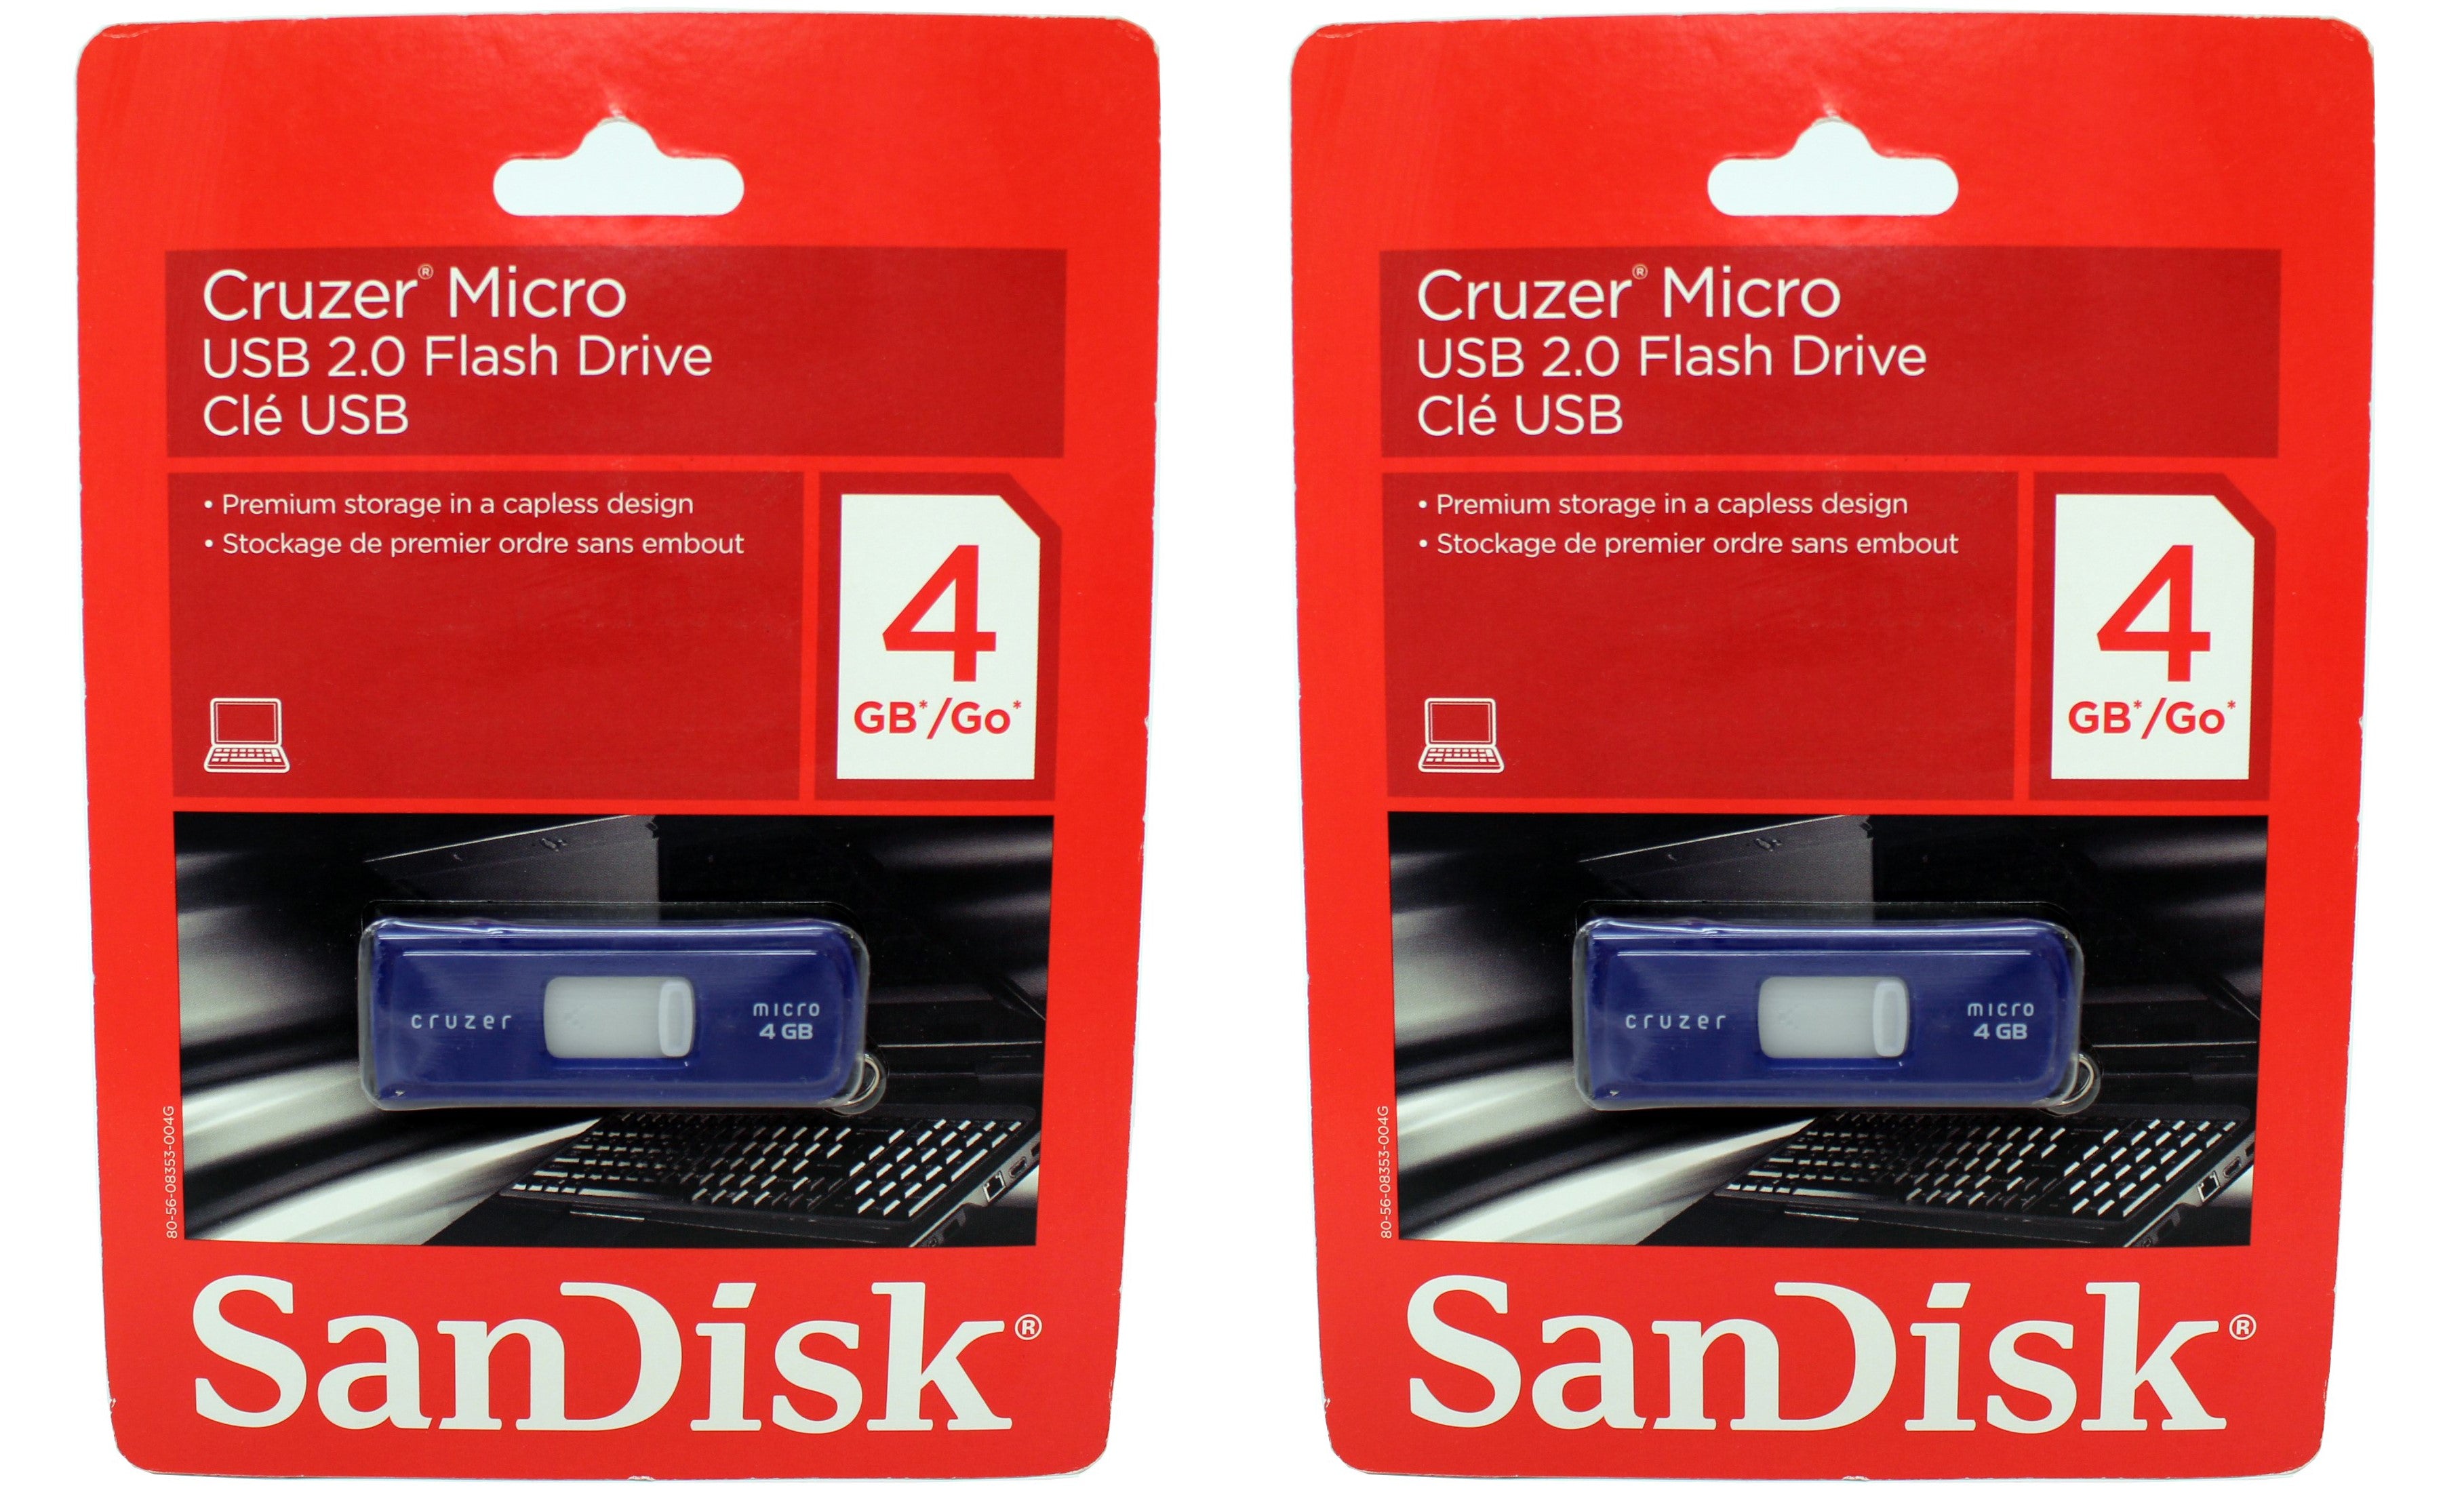 CLÉ USB SANDISK FLASH DRIVE 4GB